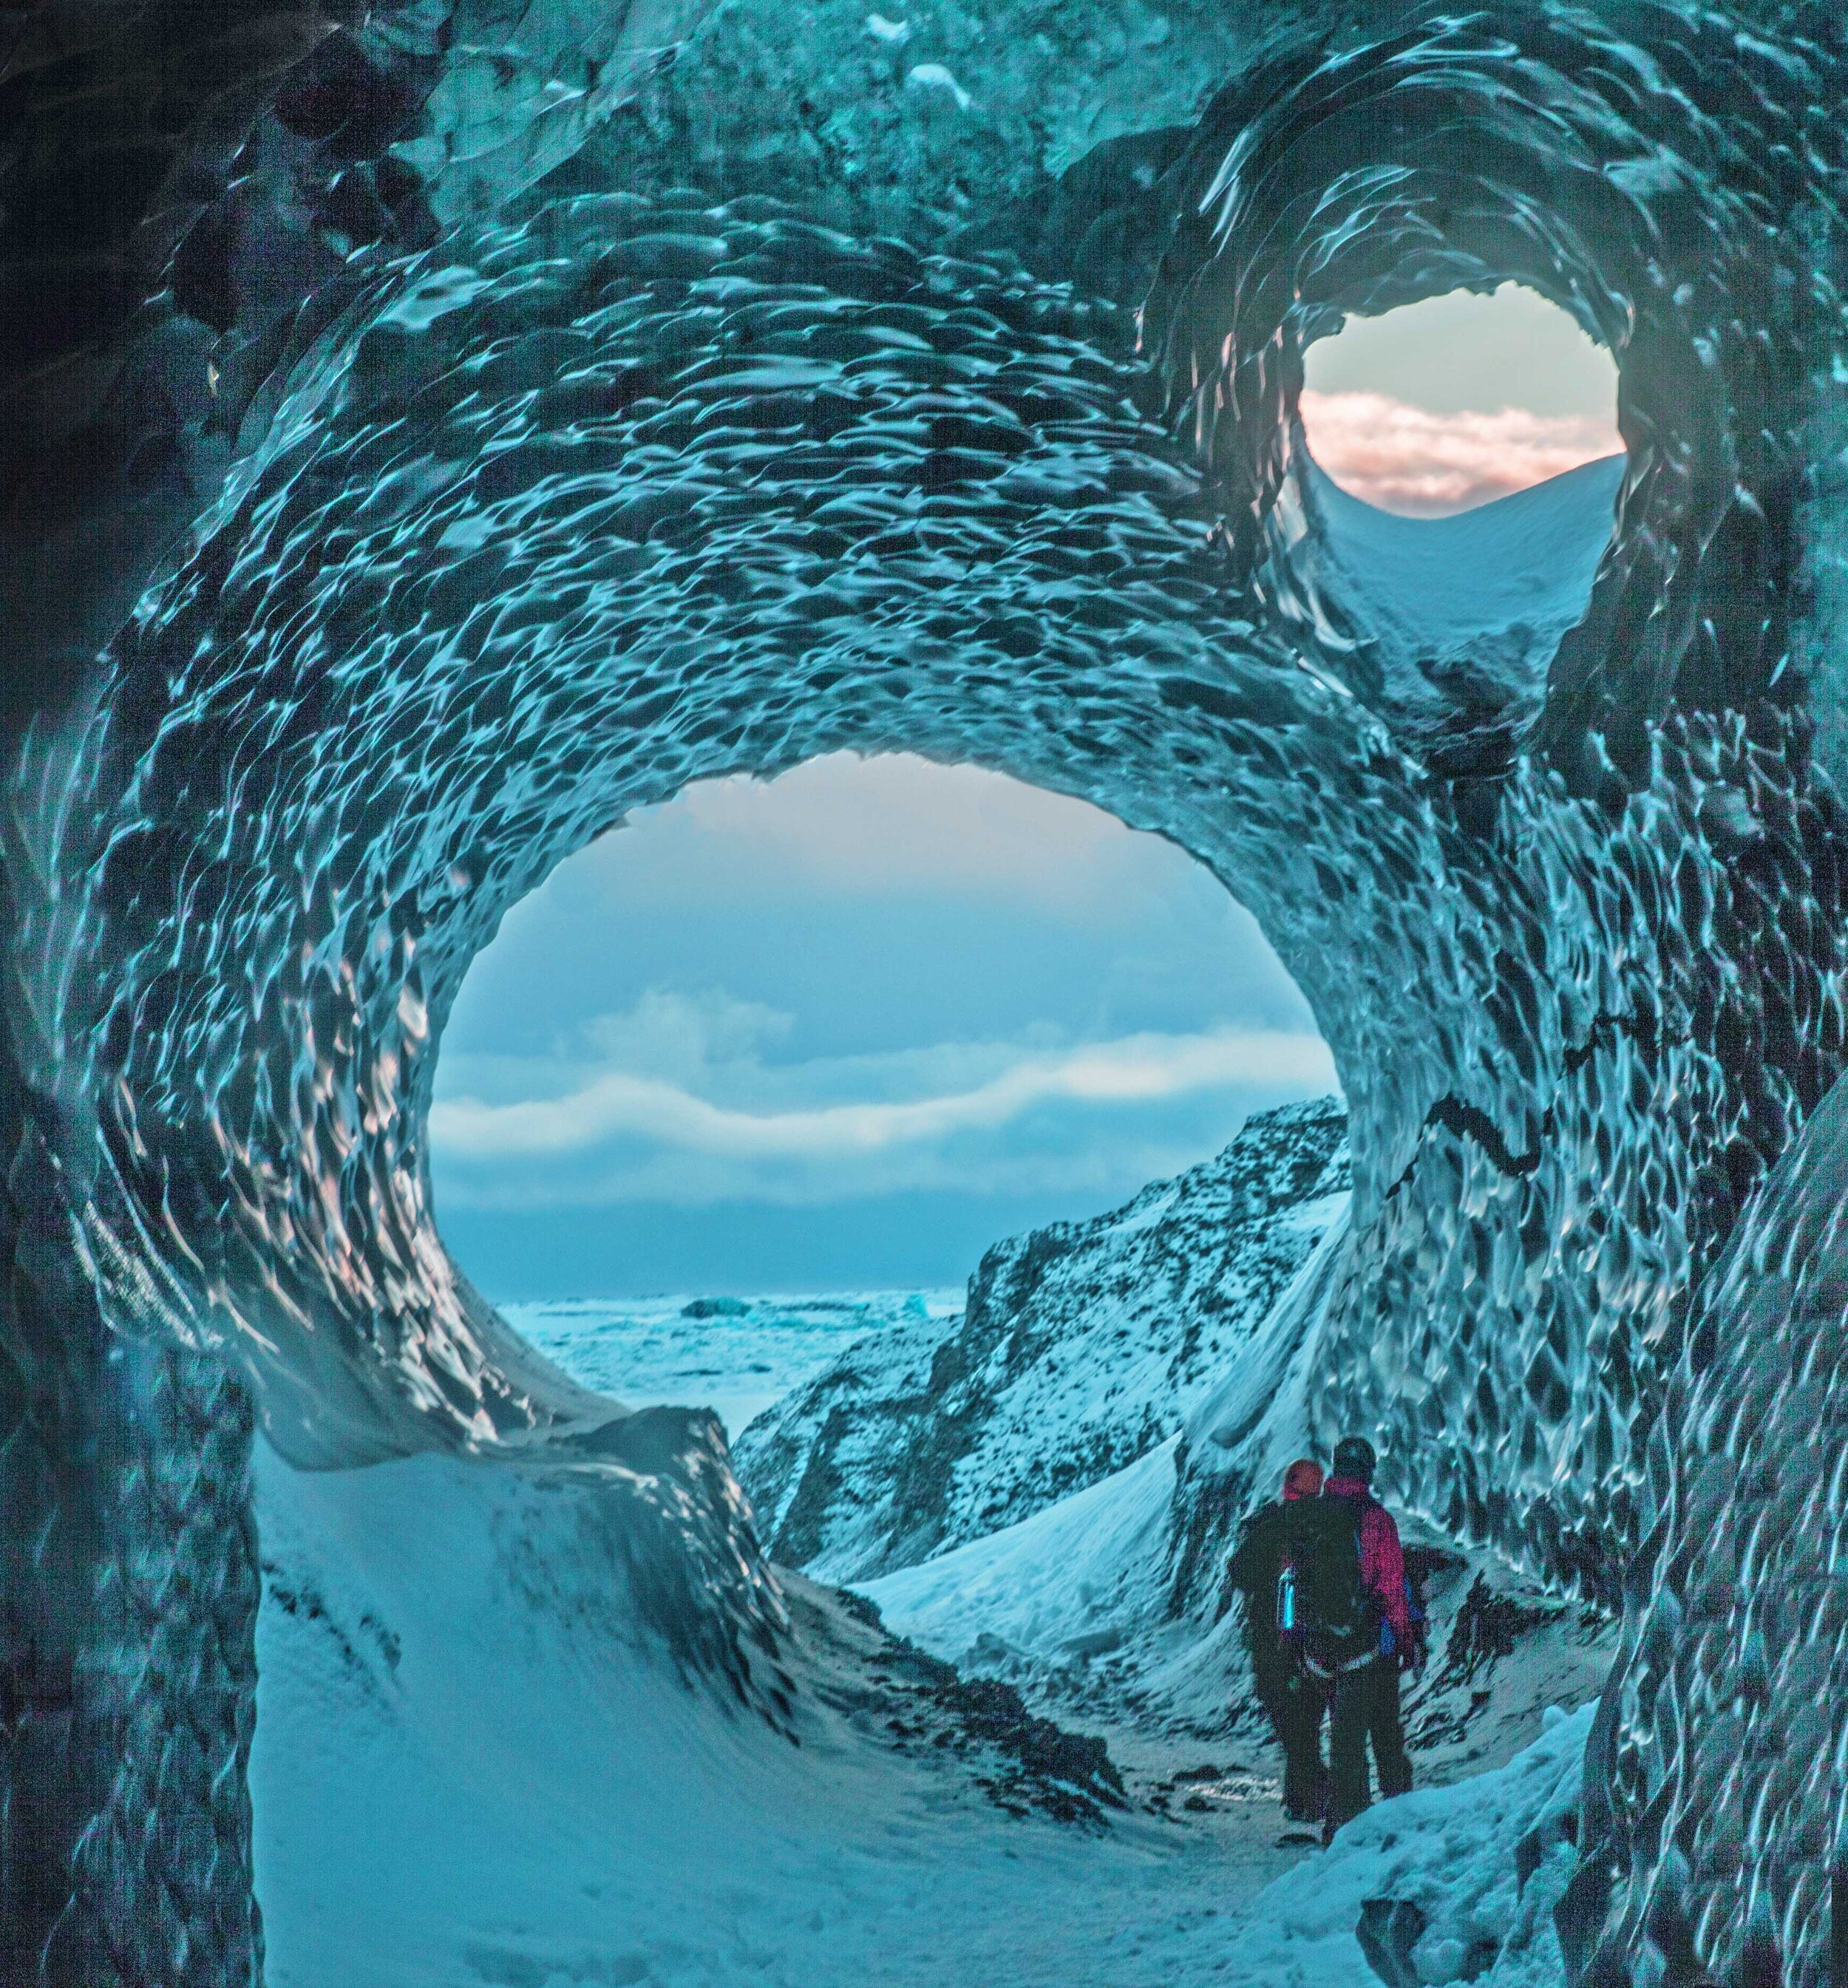  Ice Cave, Jokulsarlon Glacier, Iceland 